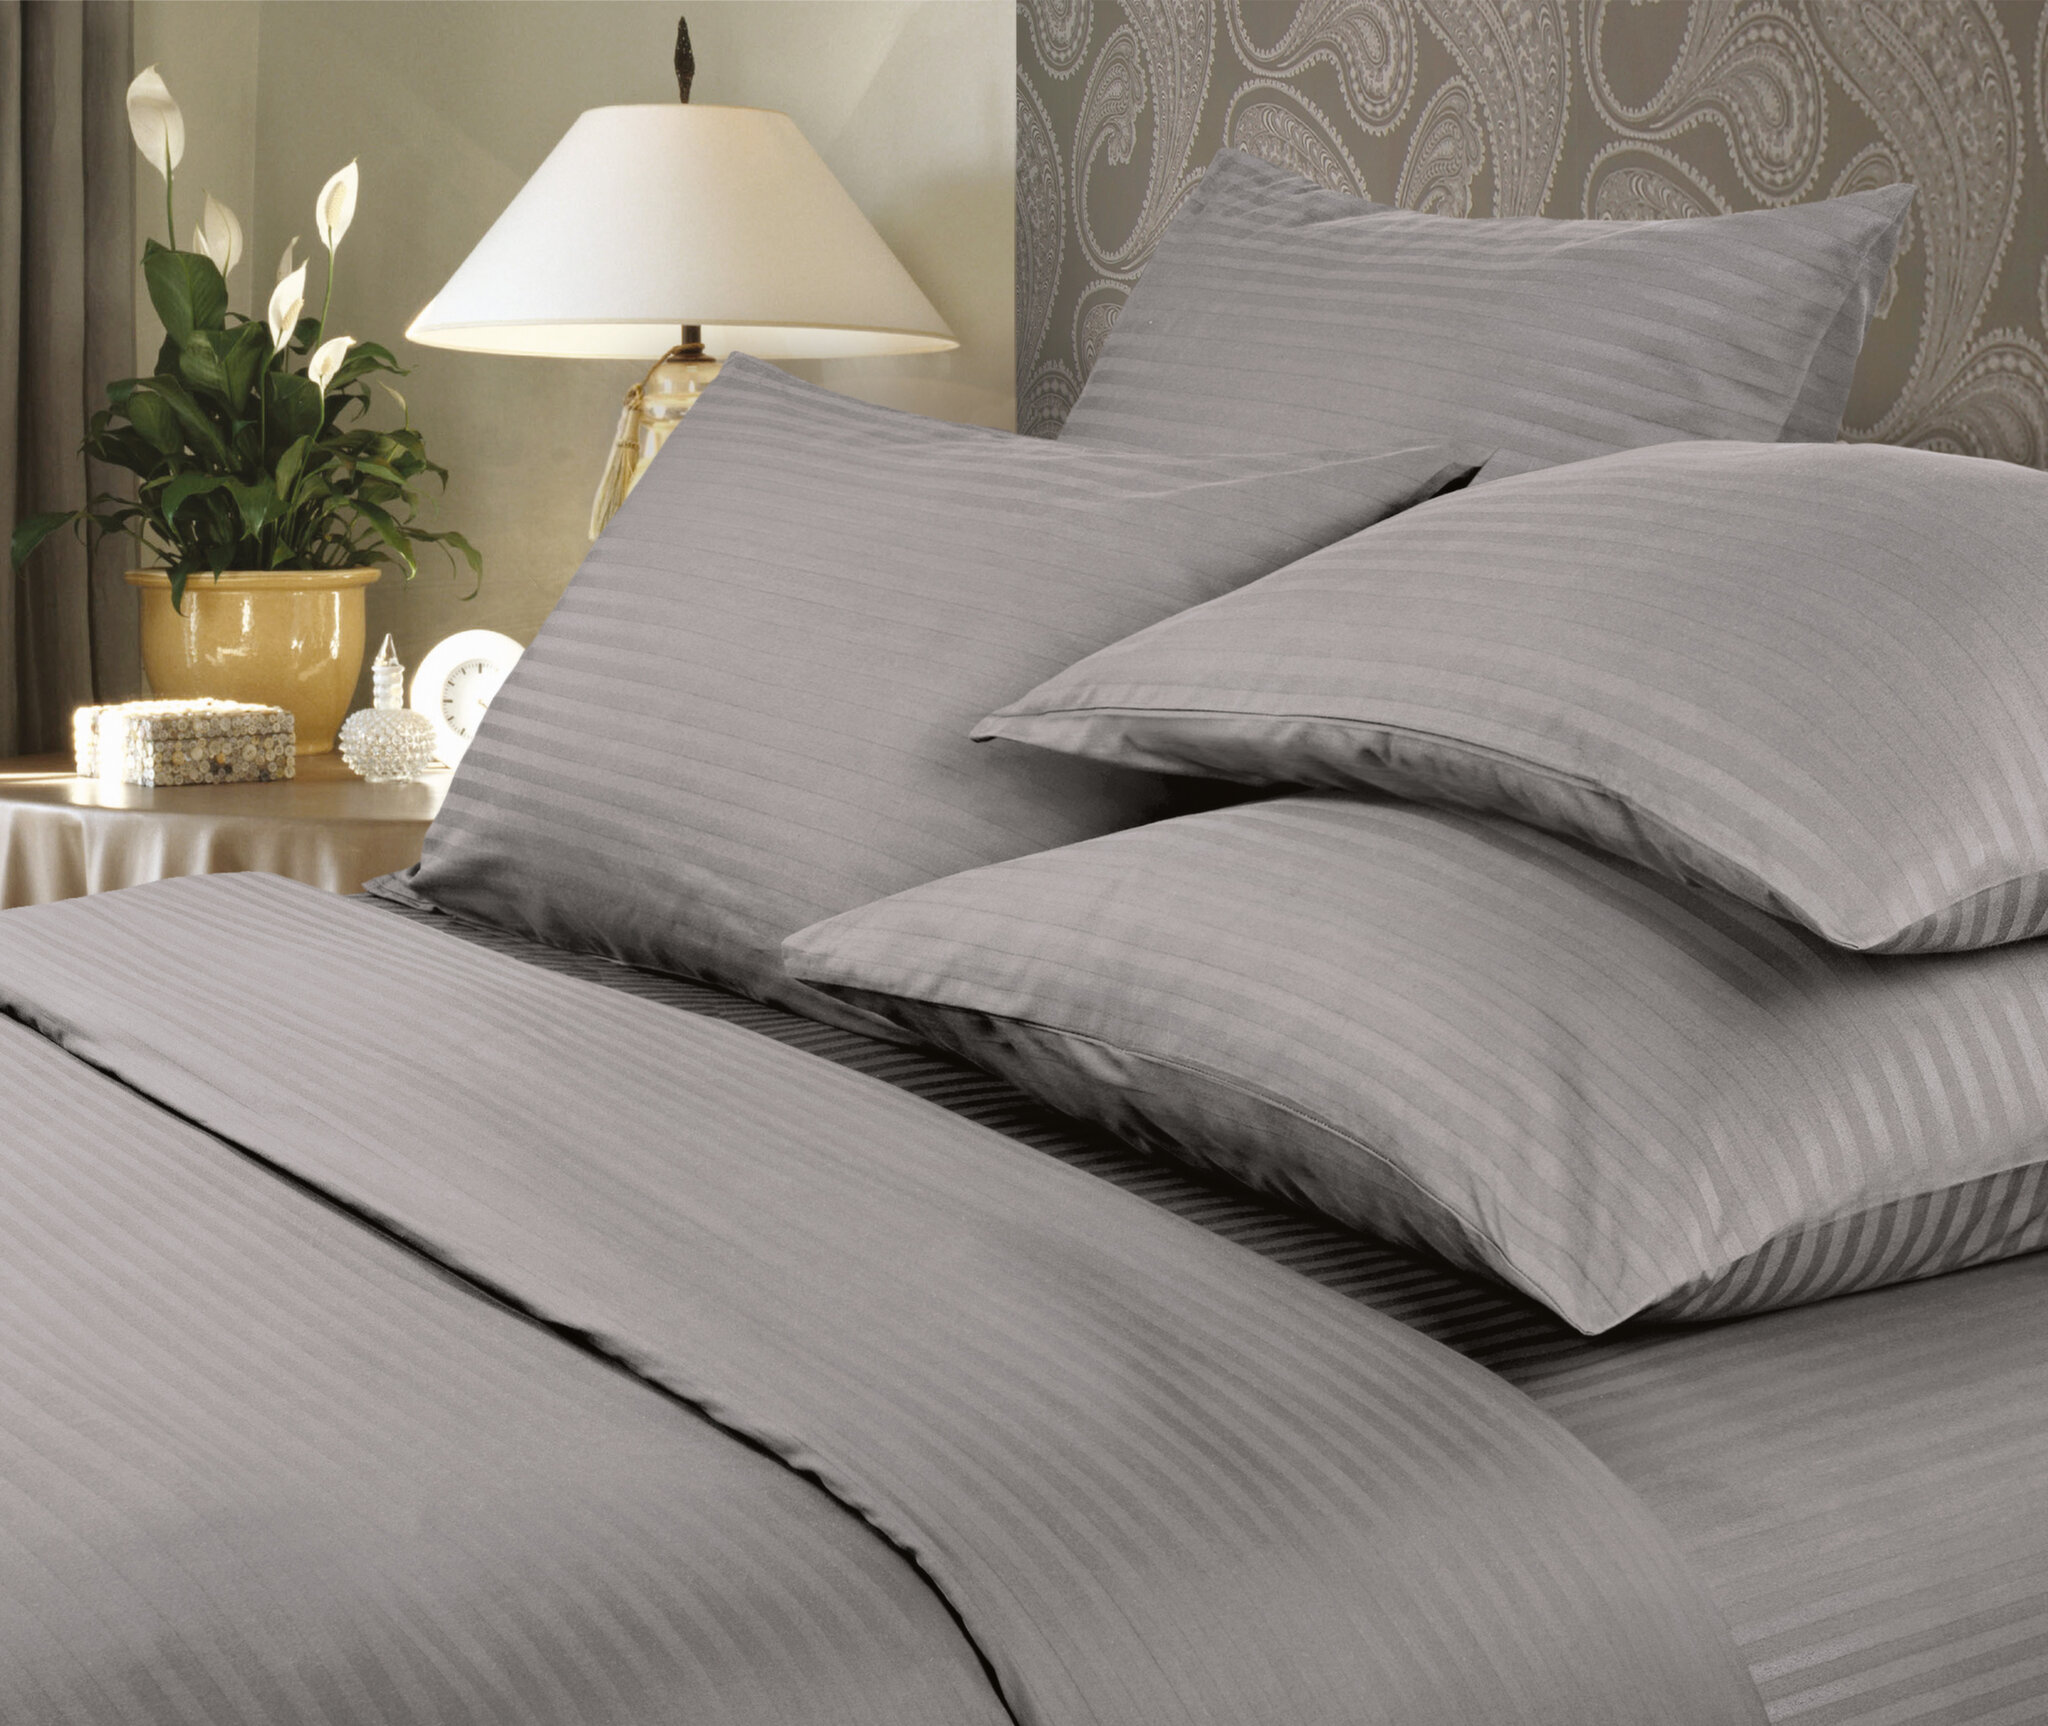 Комплект постельного белья Verossa Stripe 20СП "Gray" наволочки 50х70 пододеяльник 180х215 ткань страйп- сатин 100% хлопок